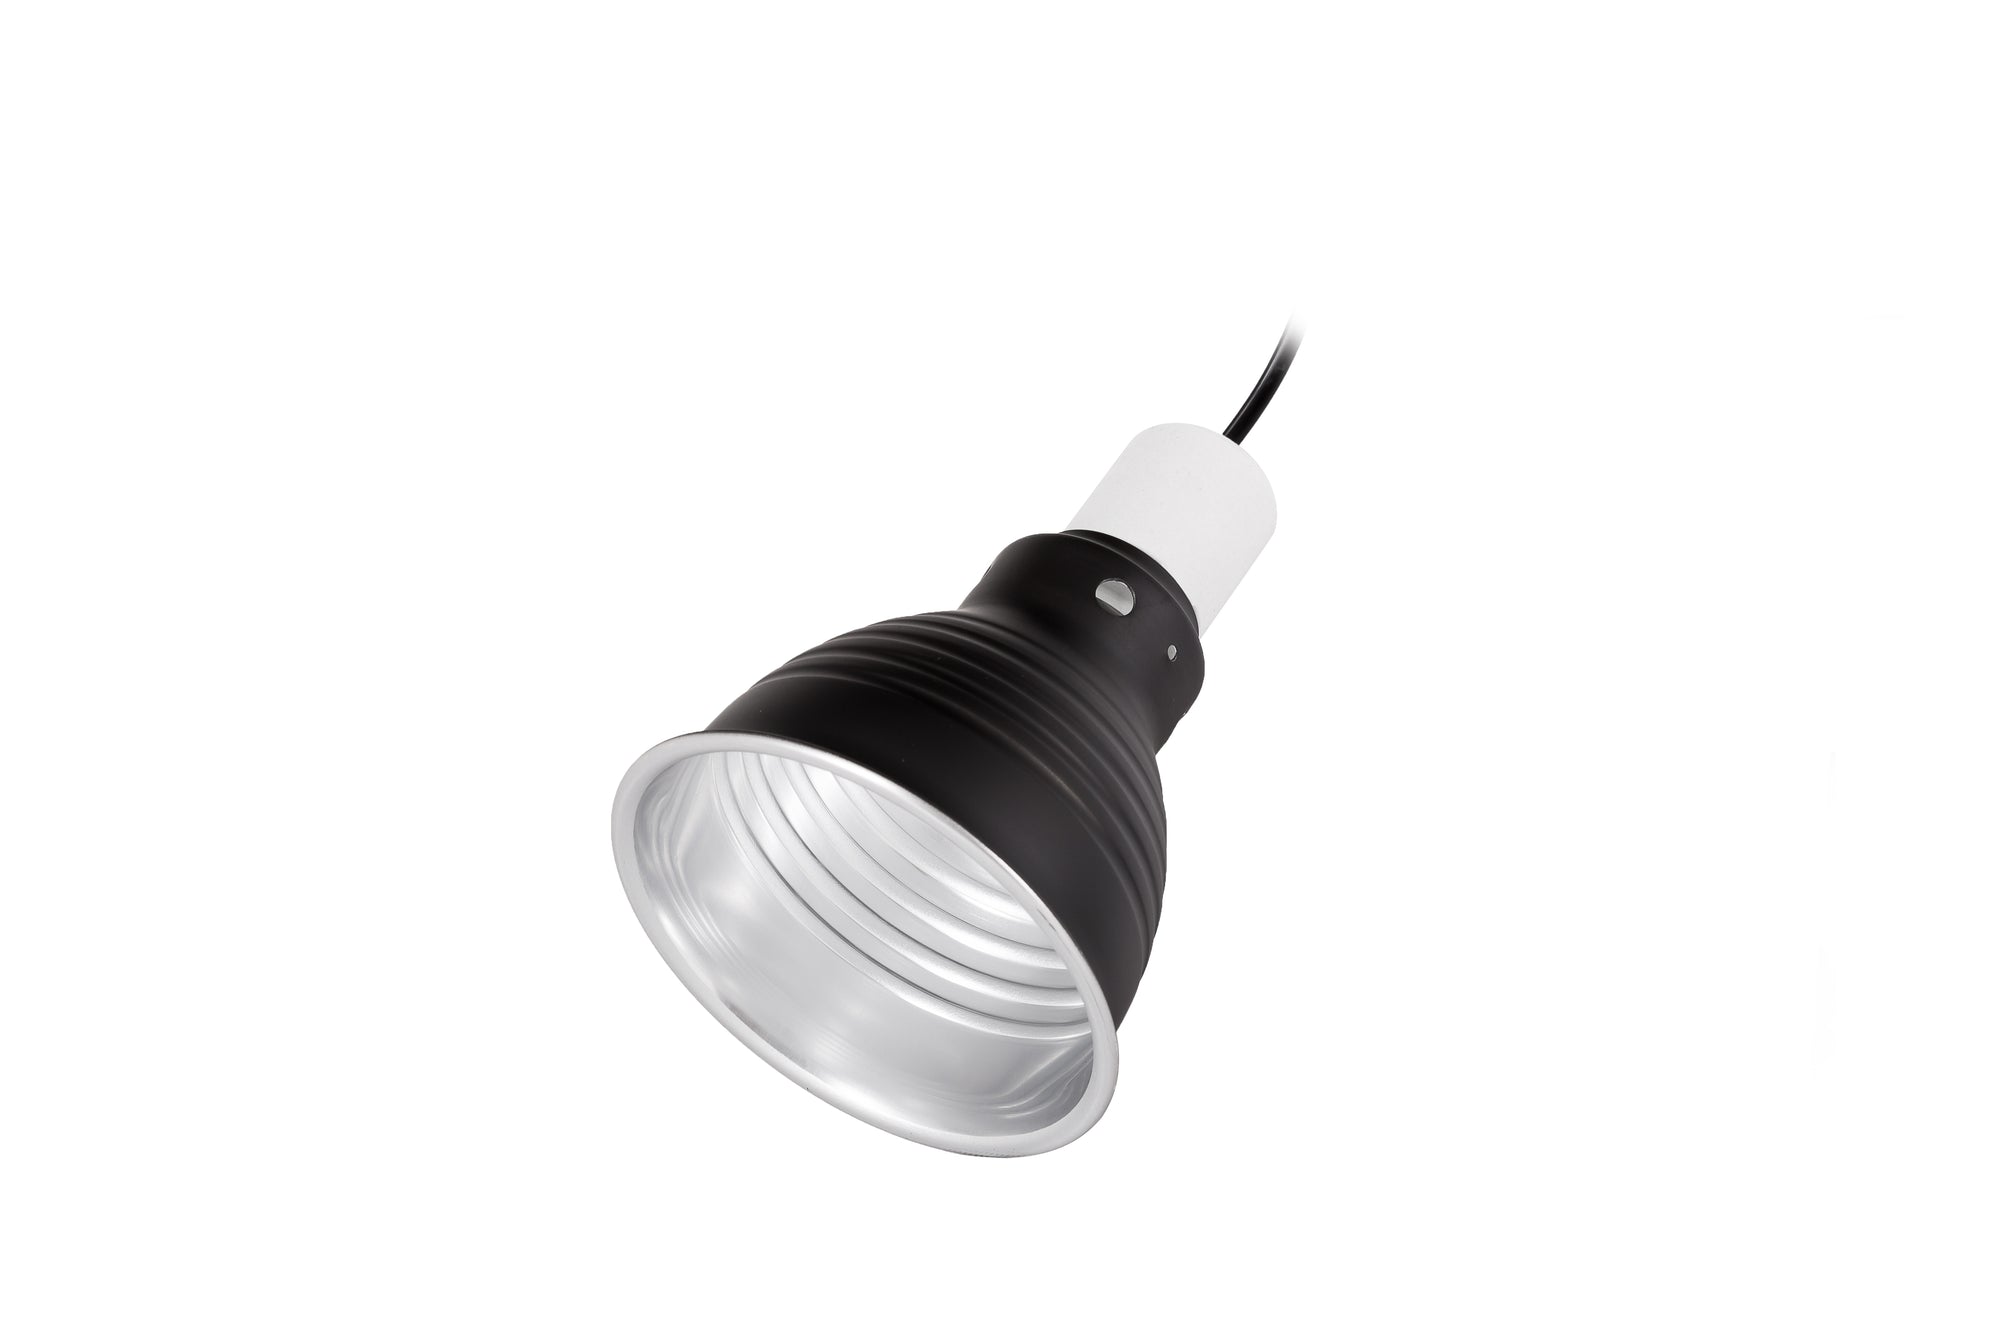 REPTIZOO - Lighting - Deep Dome Lamp Fixture - 5.5” (RL04U) - Reptile Deli Inc.